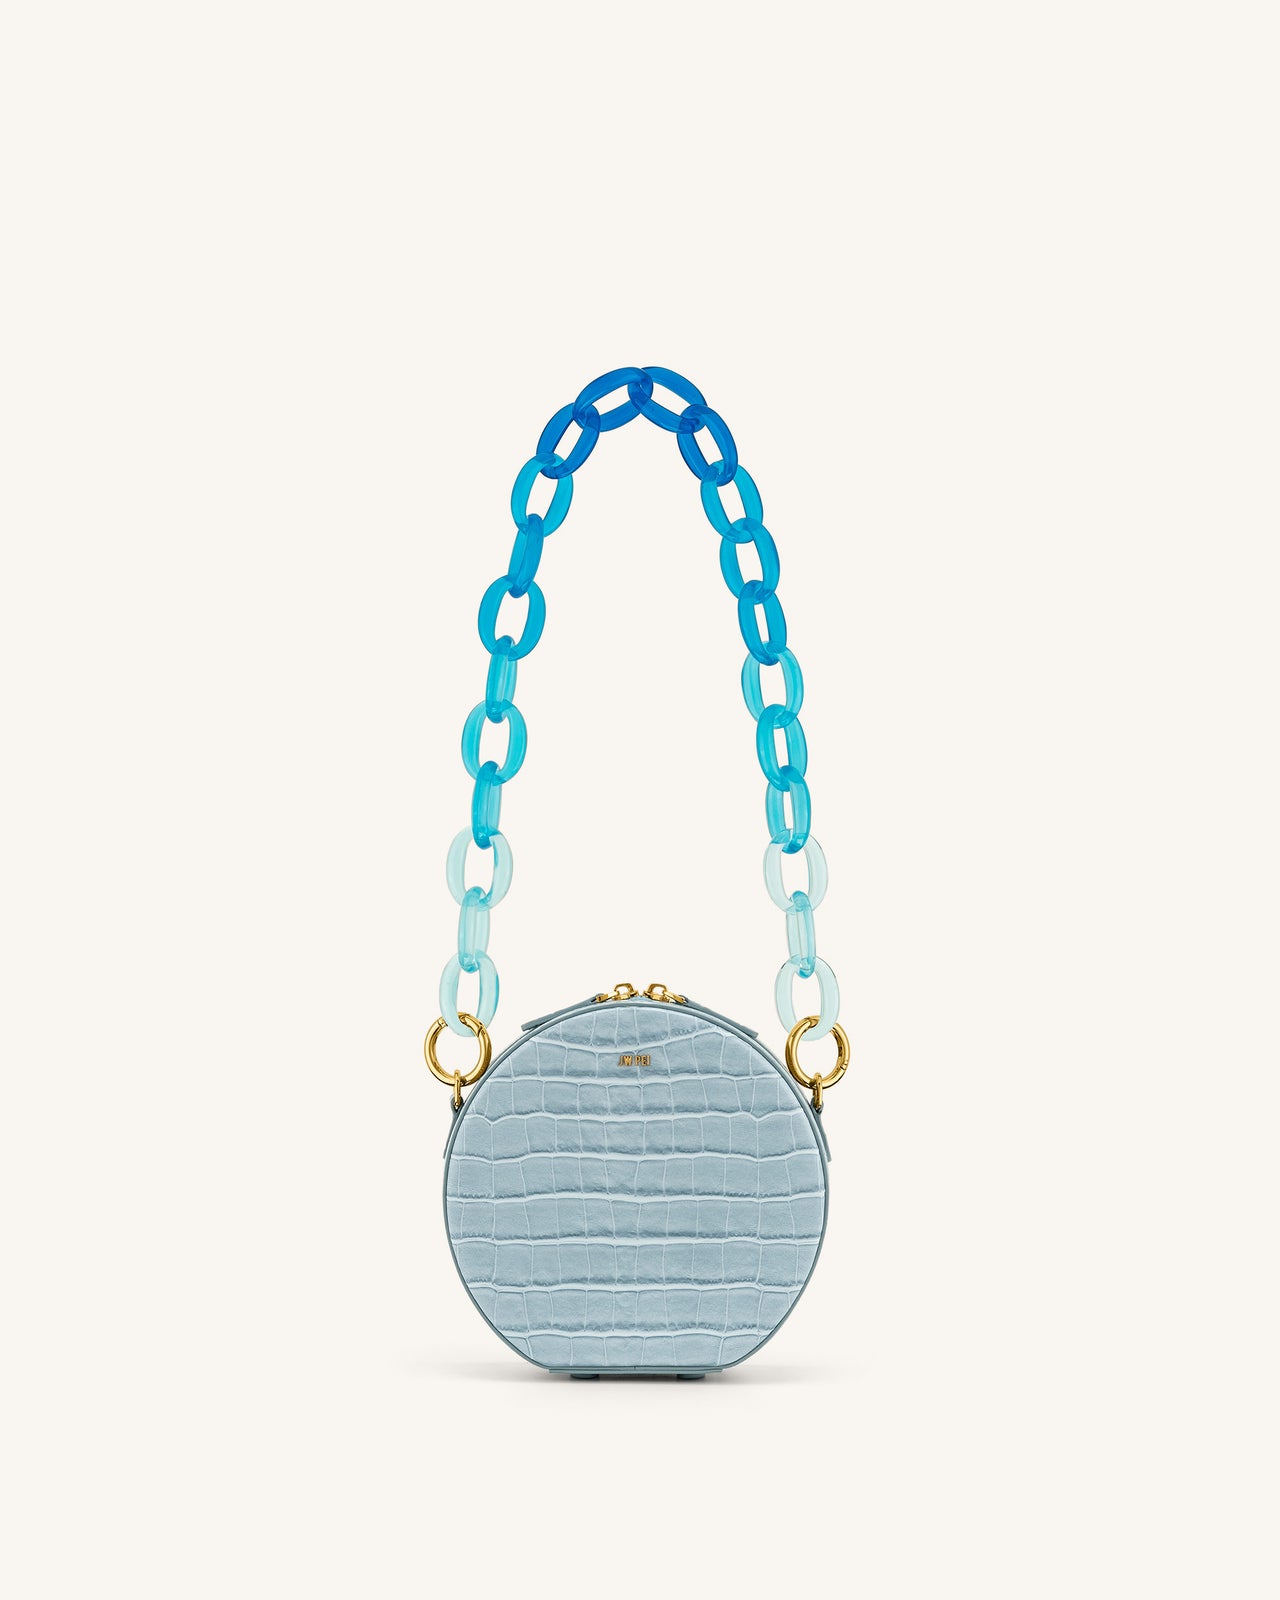 JW PEI Small Top-handle Handbag Vegan Leather Anna Faux Pearl Chain  Accessories for DIY Hand bags: Handbags